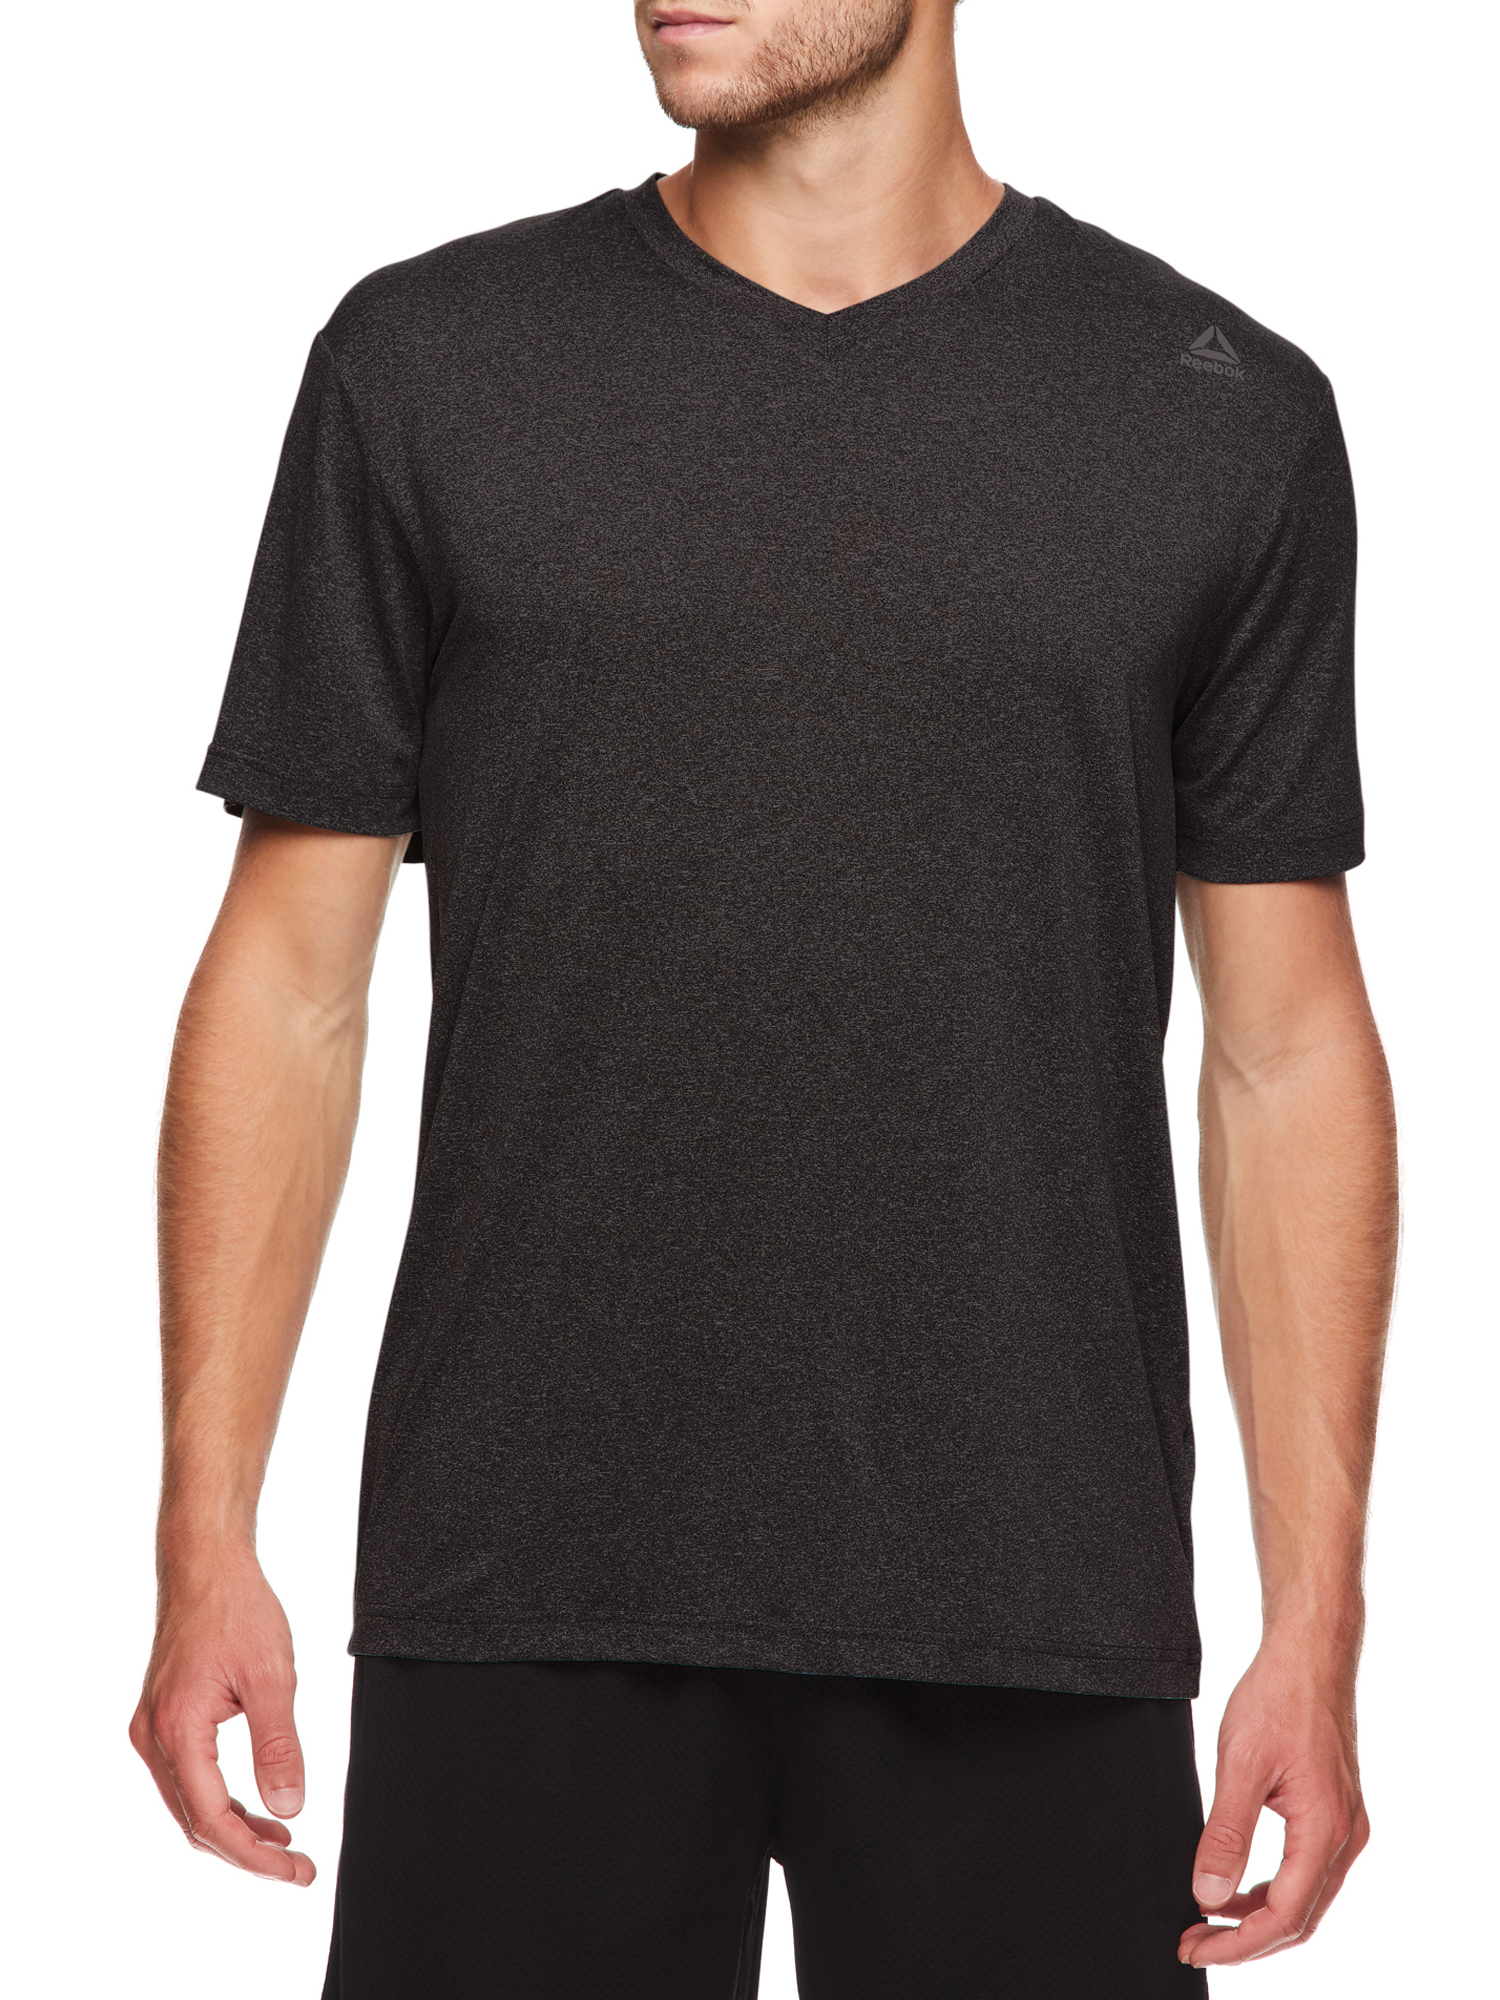 Reebok Men's Bolt Strike V-Neck Short Sleeve T-Shirt - image 1 of 4